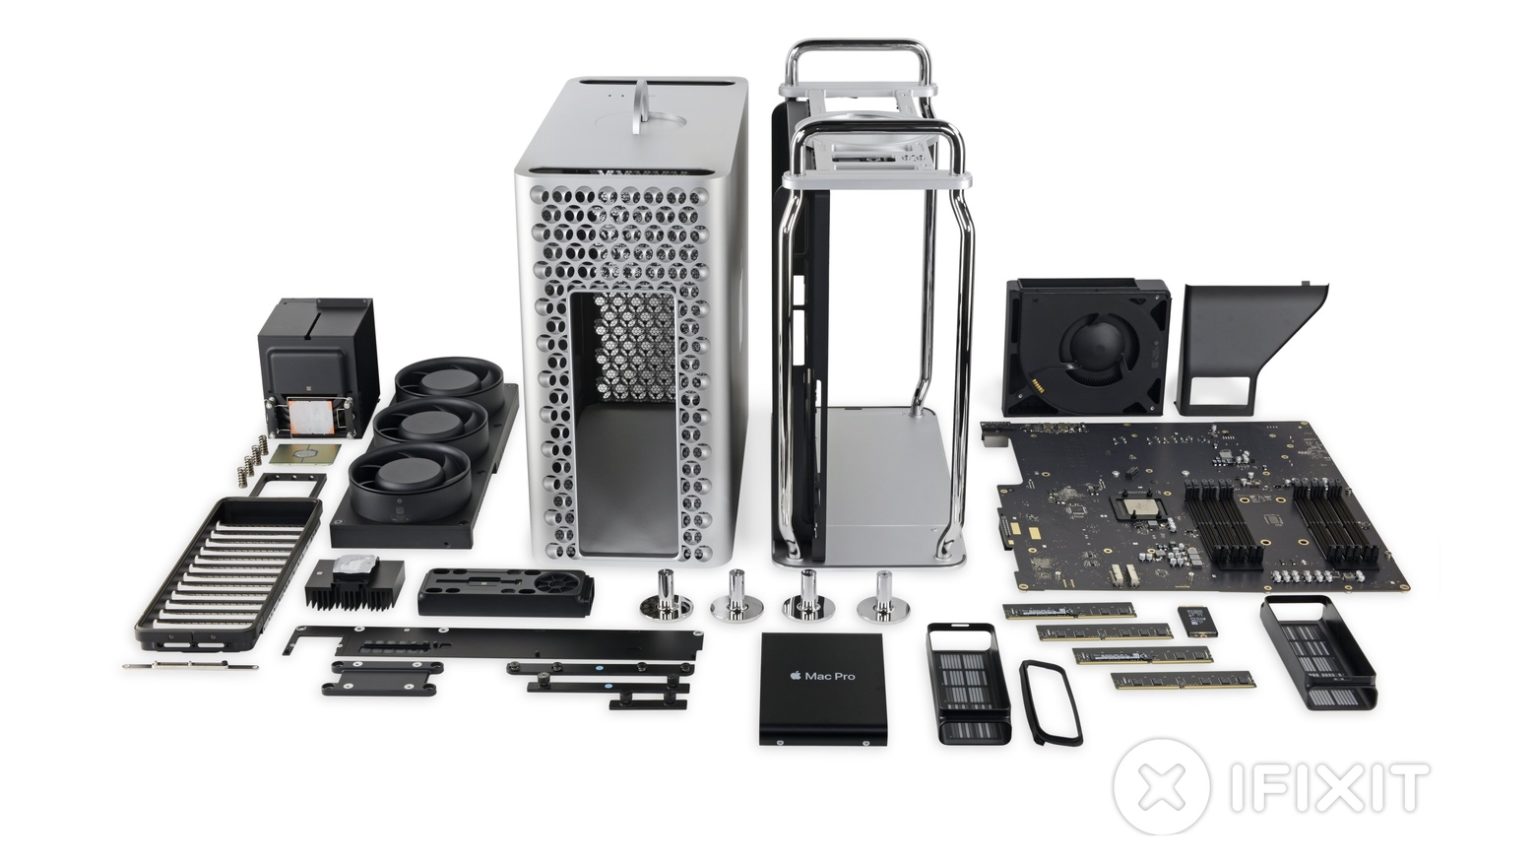 A 2019 Mac Pro after an iFixit tear down